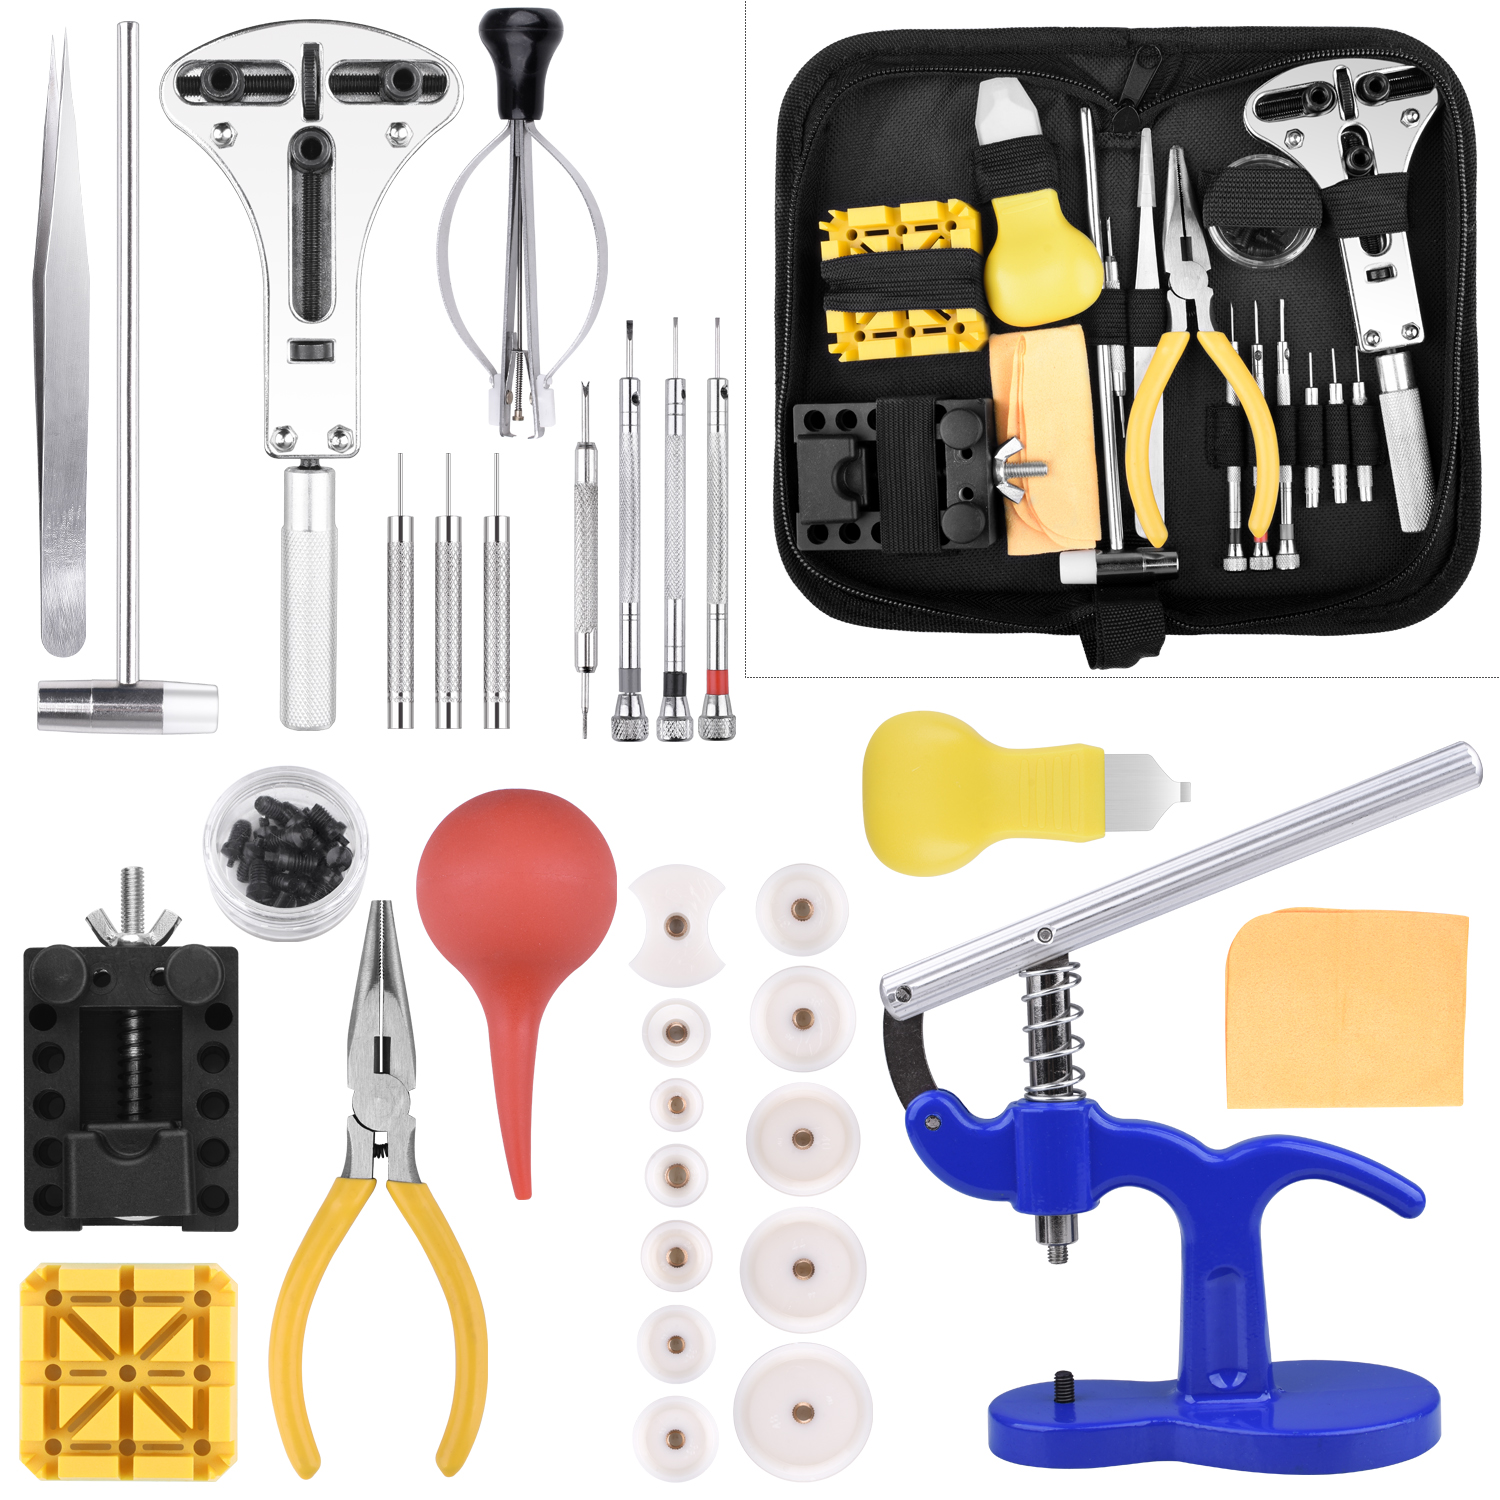 Watch Repair Tool Kit, Longrune